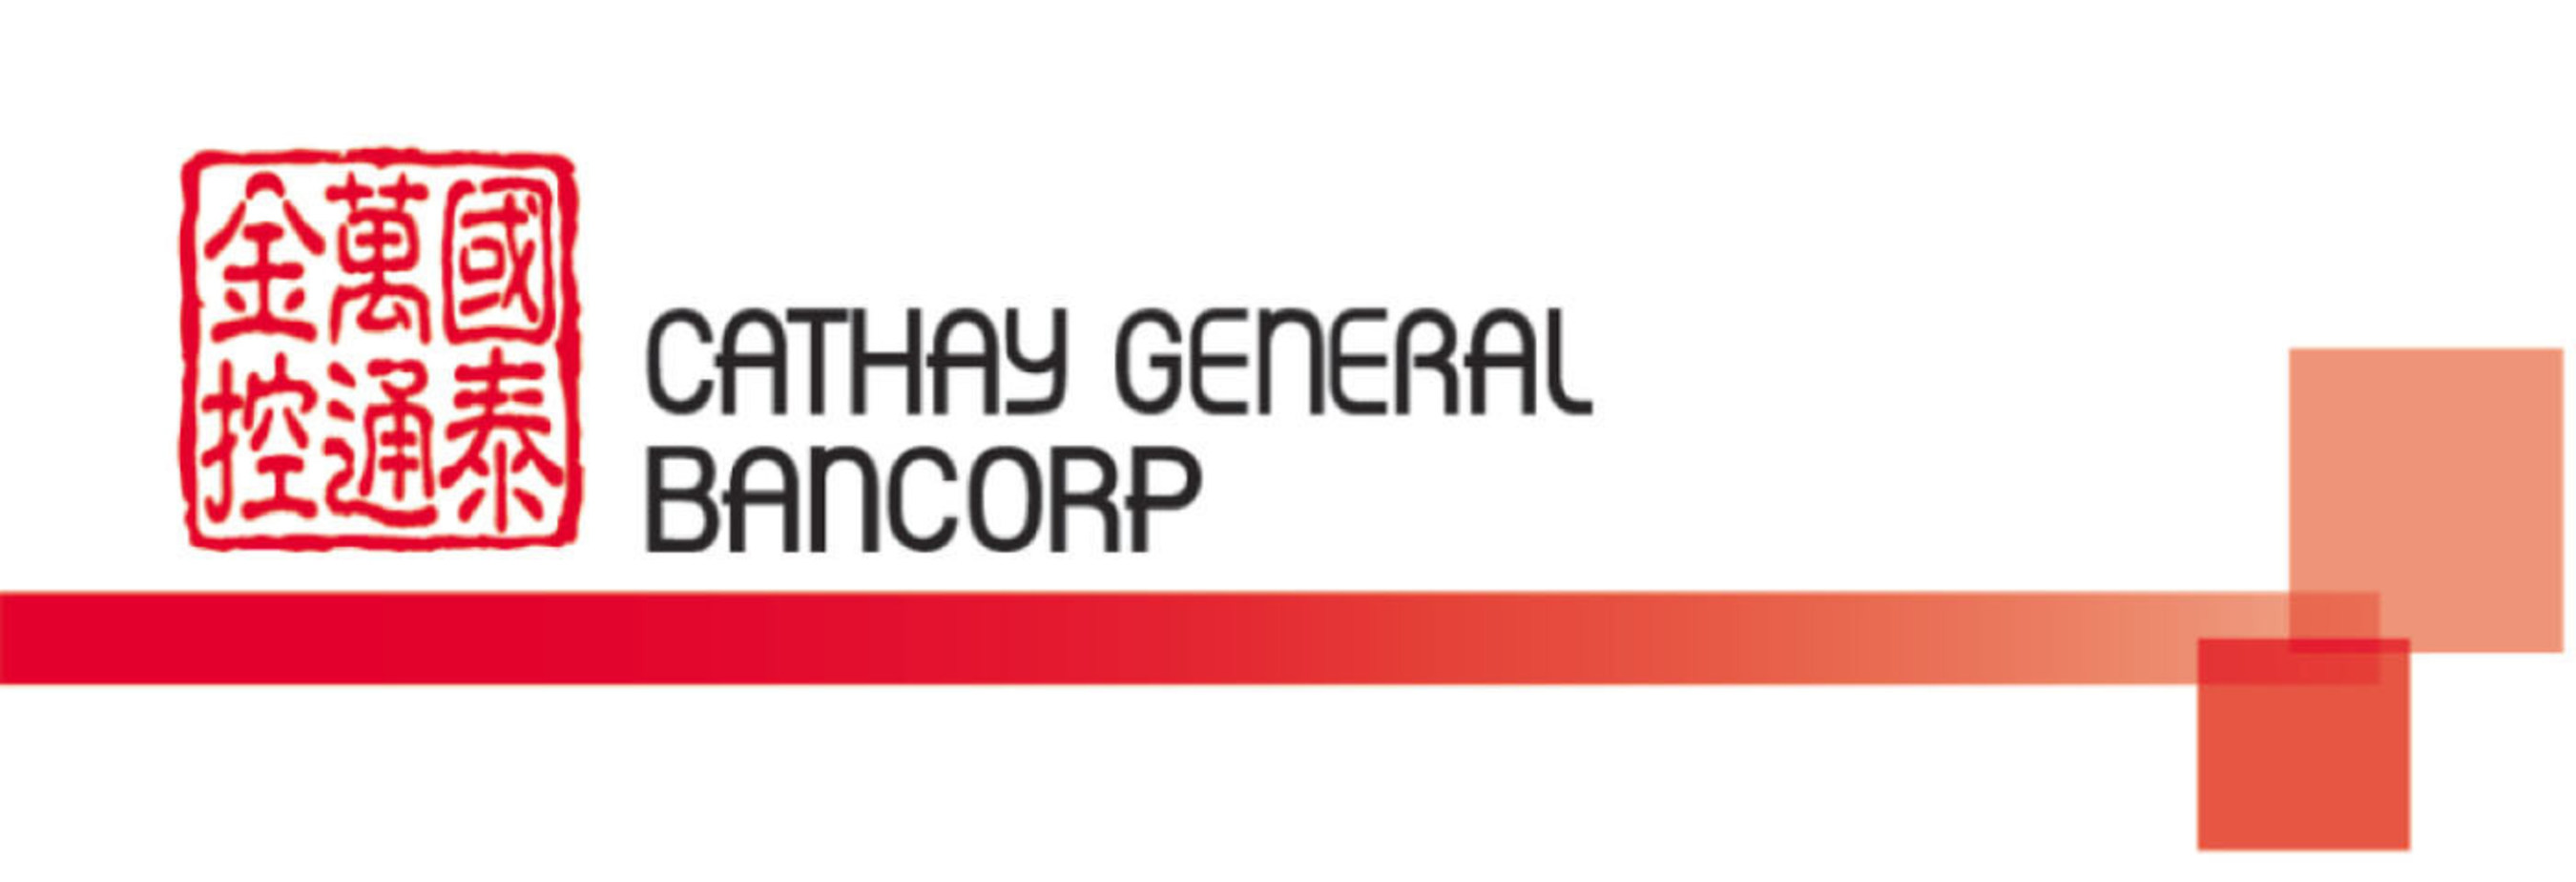 Cathay General Bancorp (PRNewsFoto/Cathay General Bancorp)